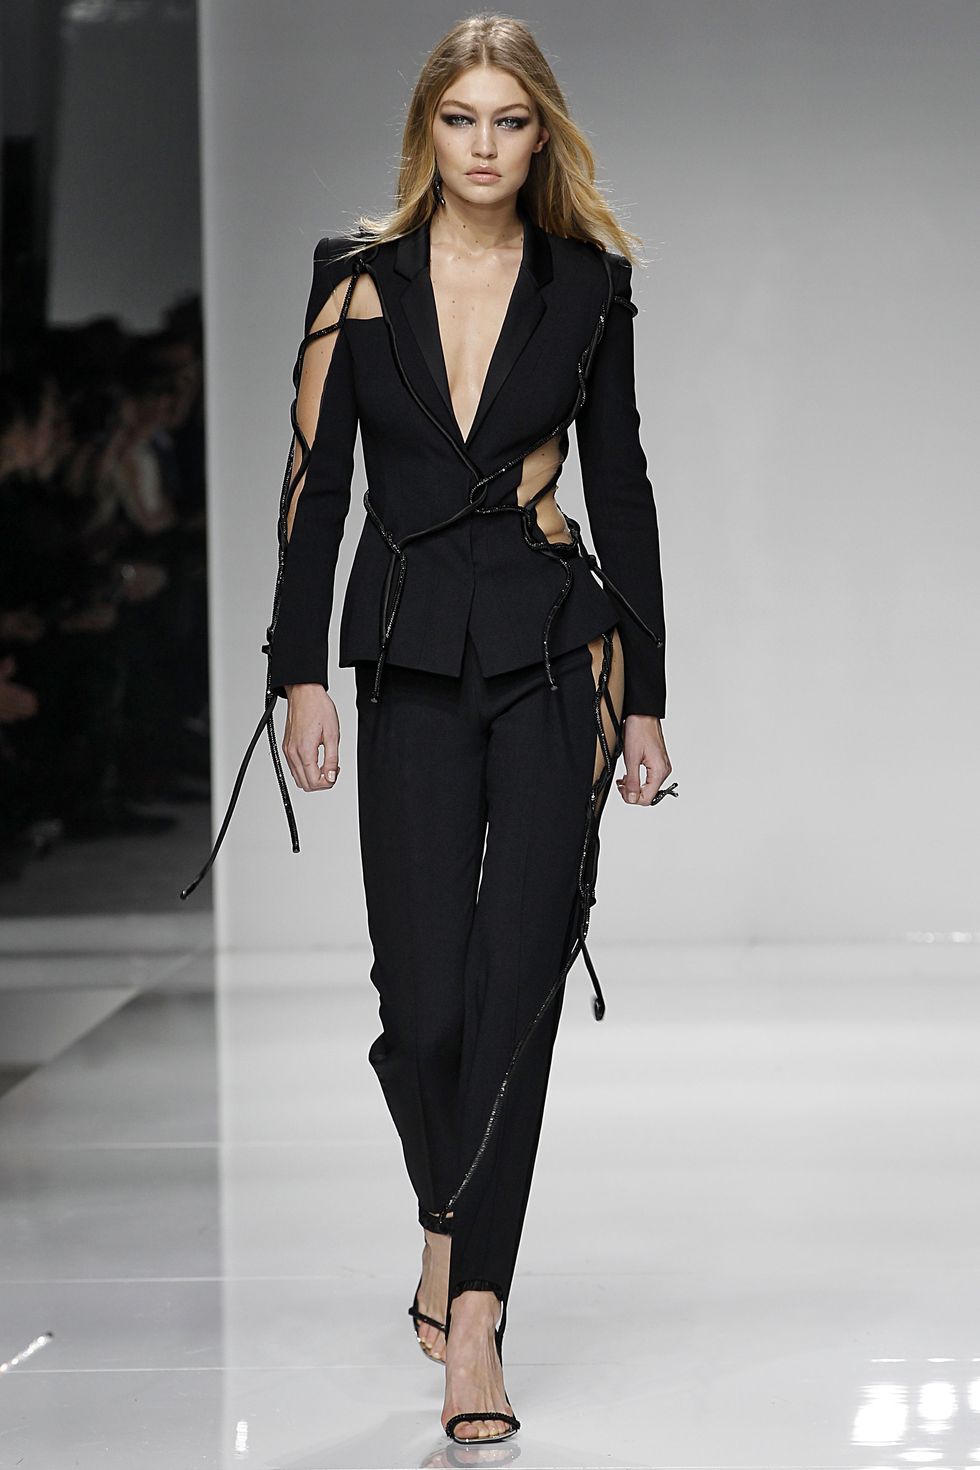 Gigi Hadid walking for Versace at haute couture Paris Fashion Week